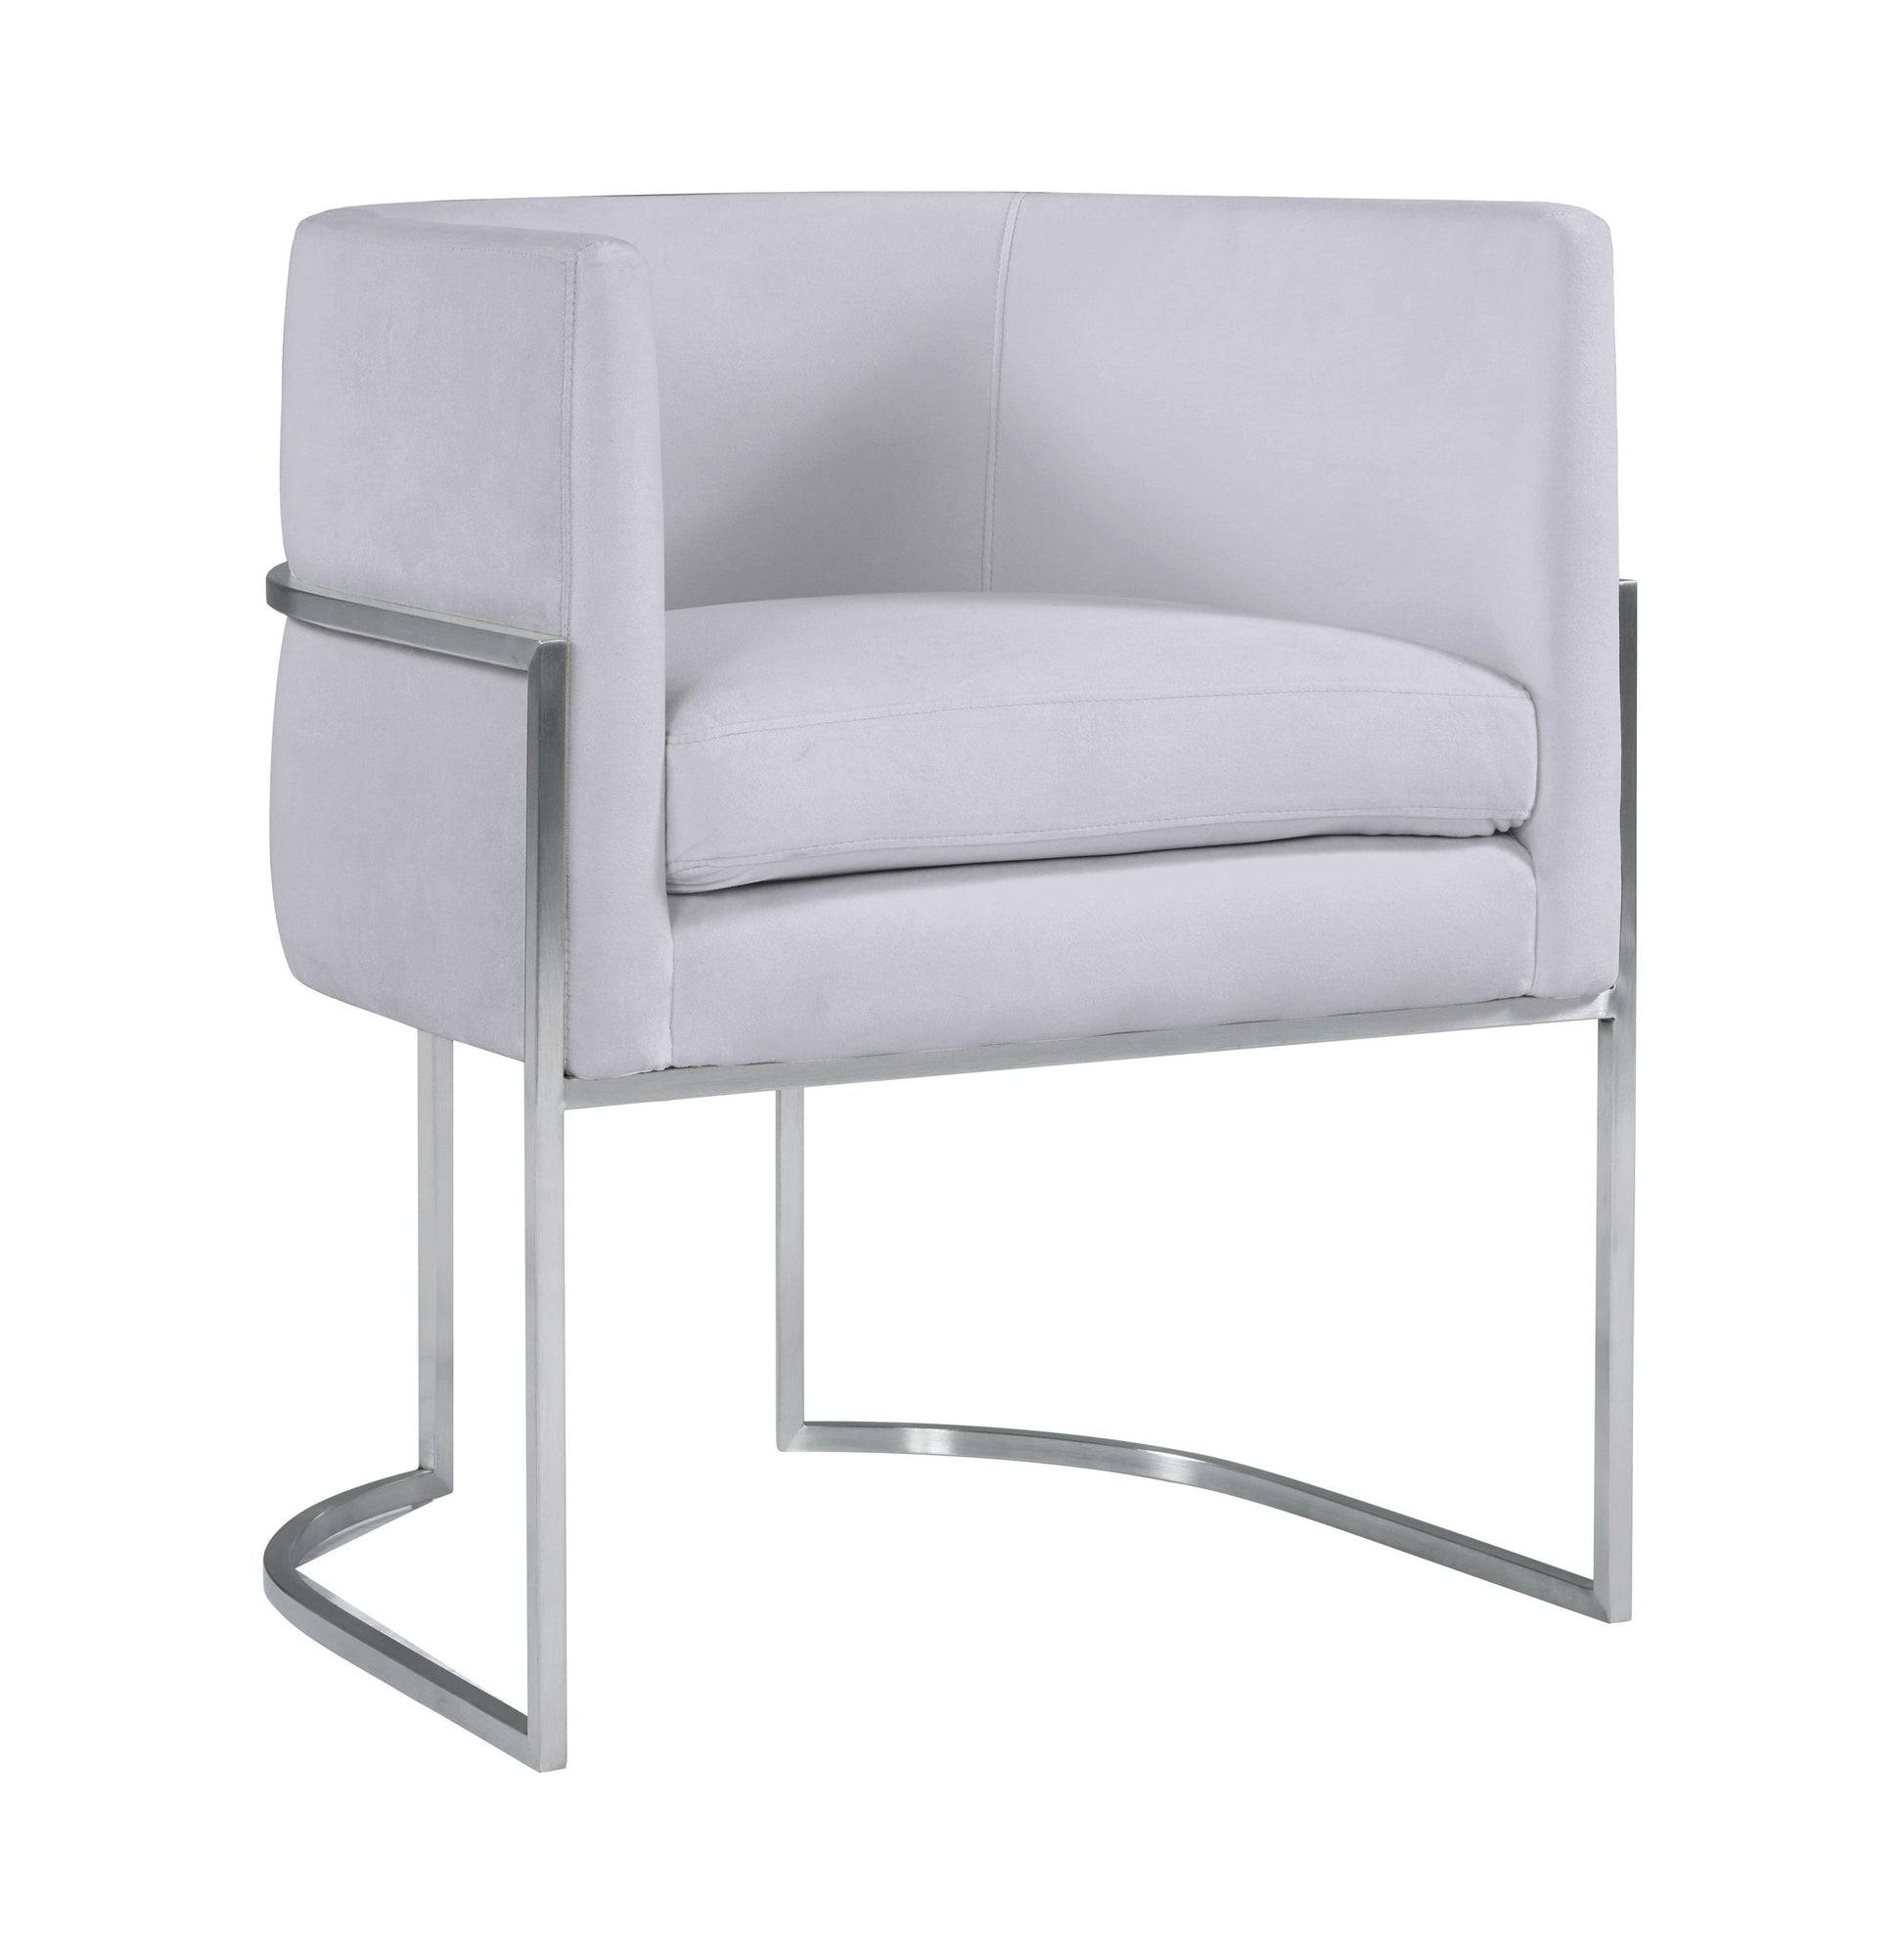 Tov Furniture Giselle Grey Velvet Dining Chair with Silver Leg